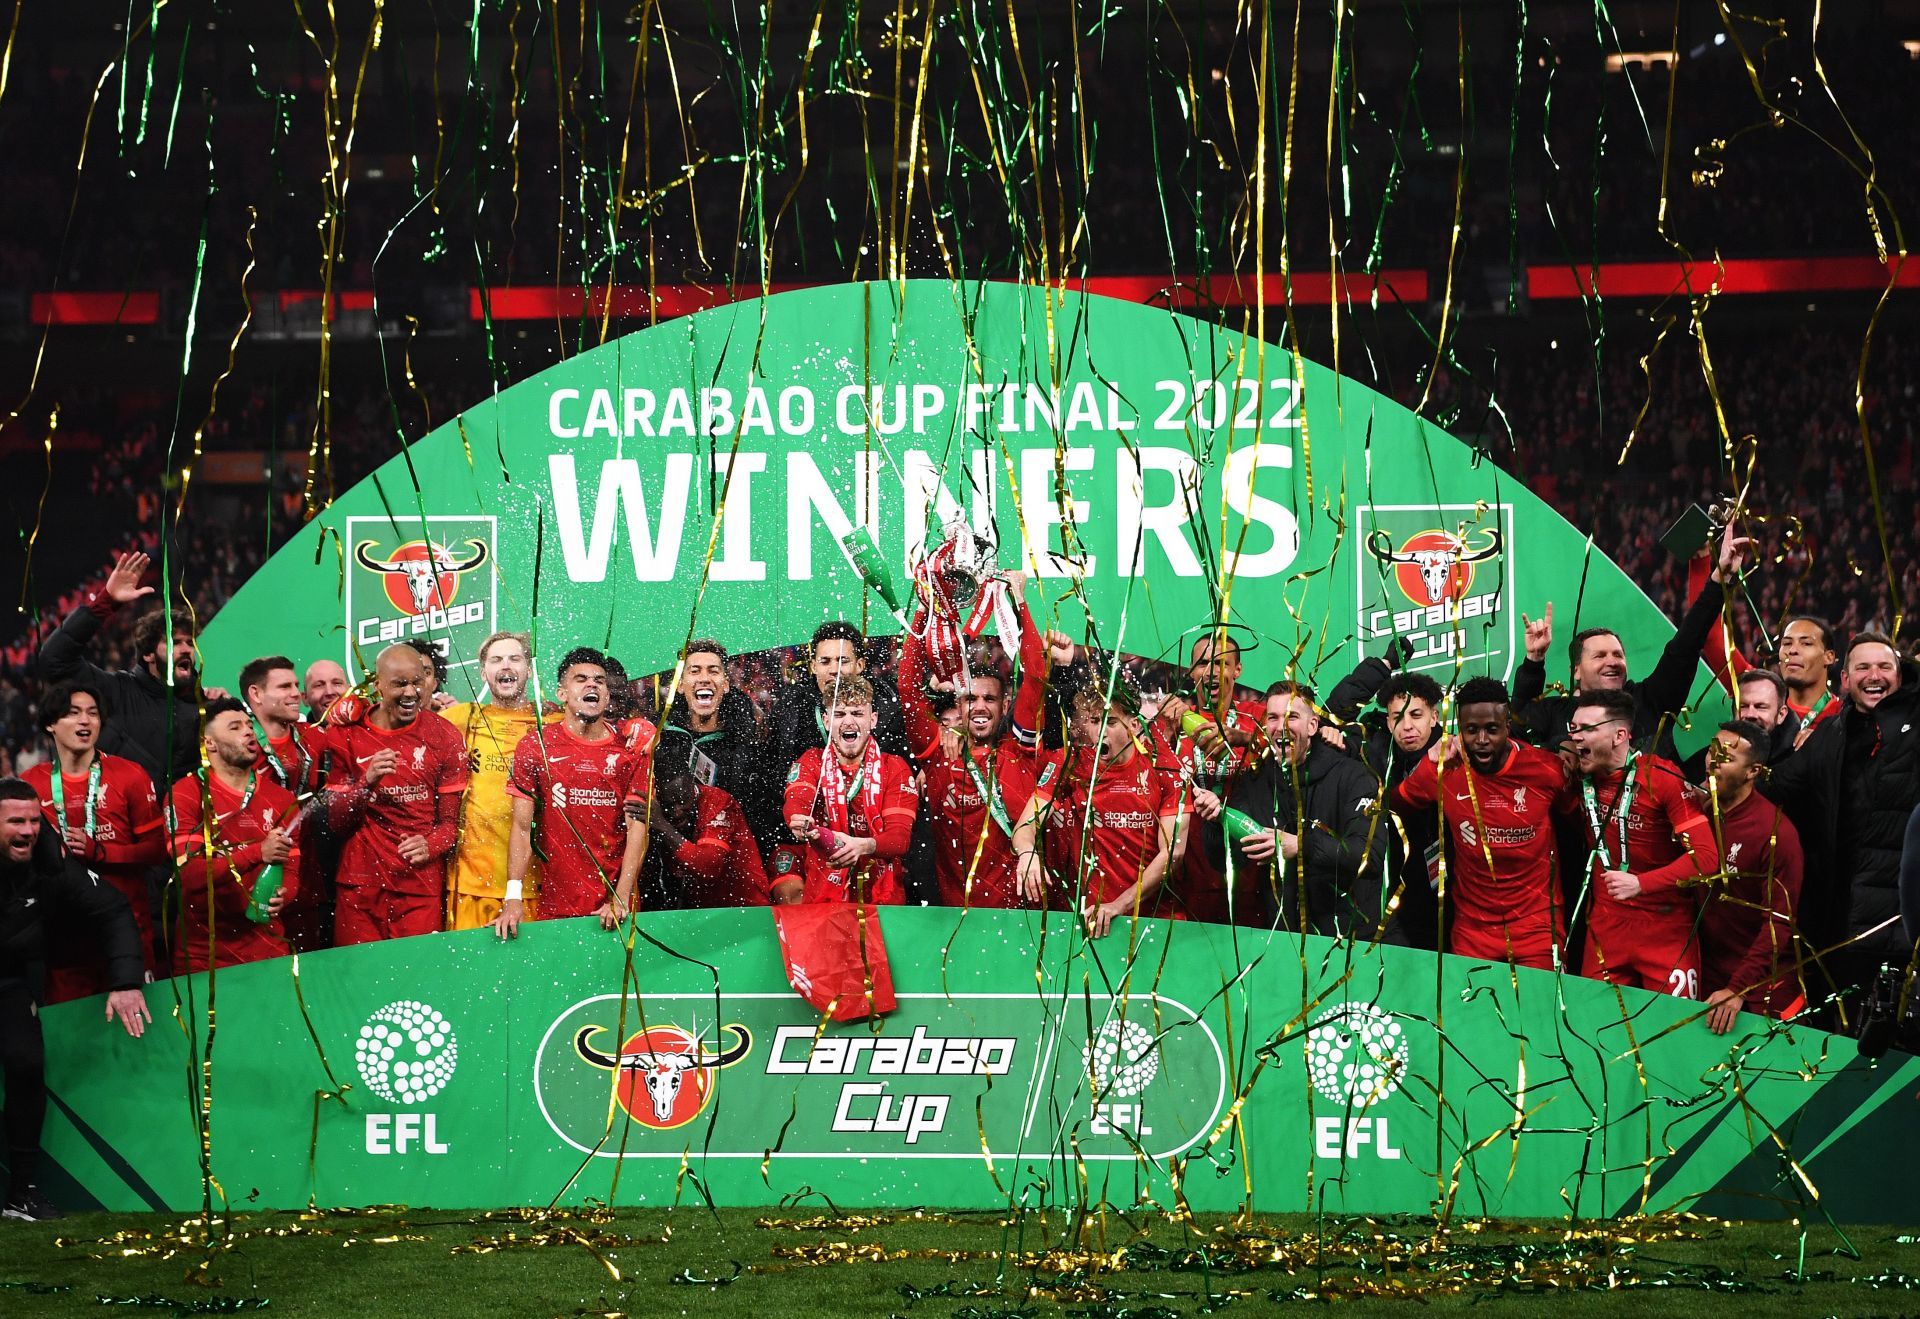 Liverpool has nine Carabao Cup titles